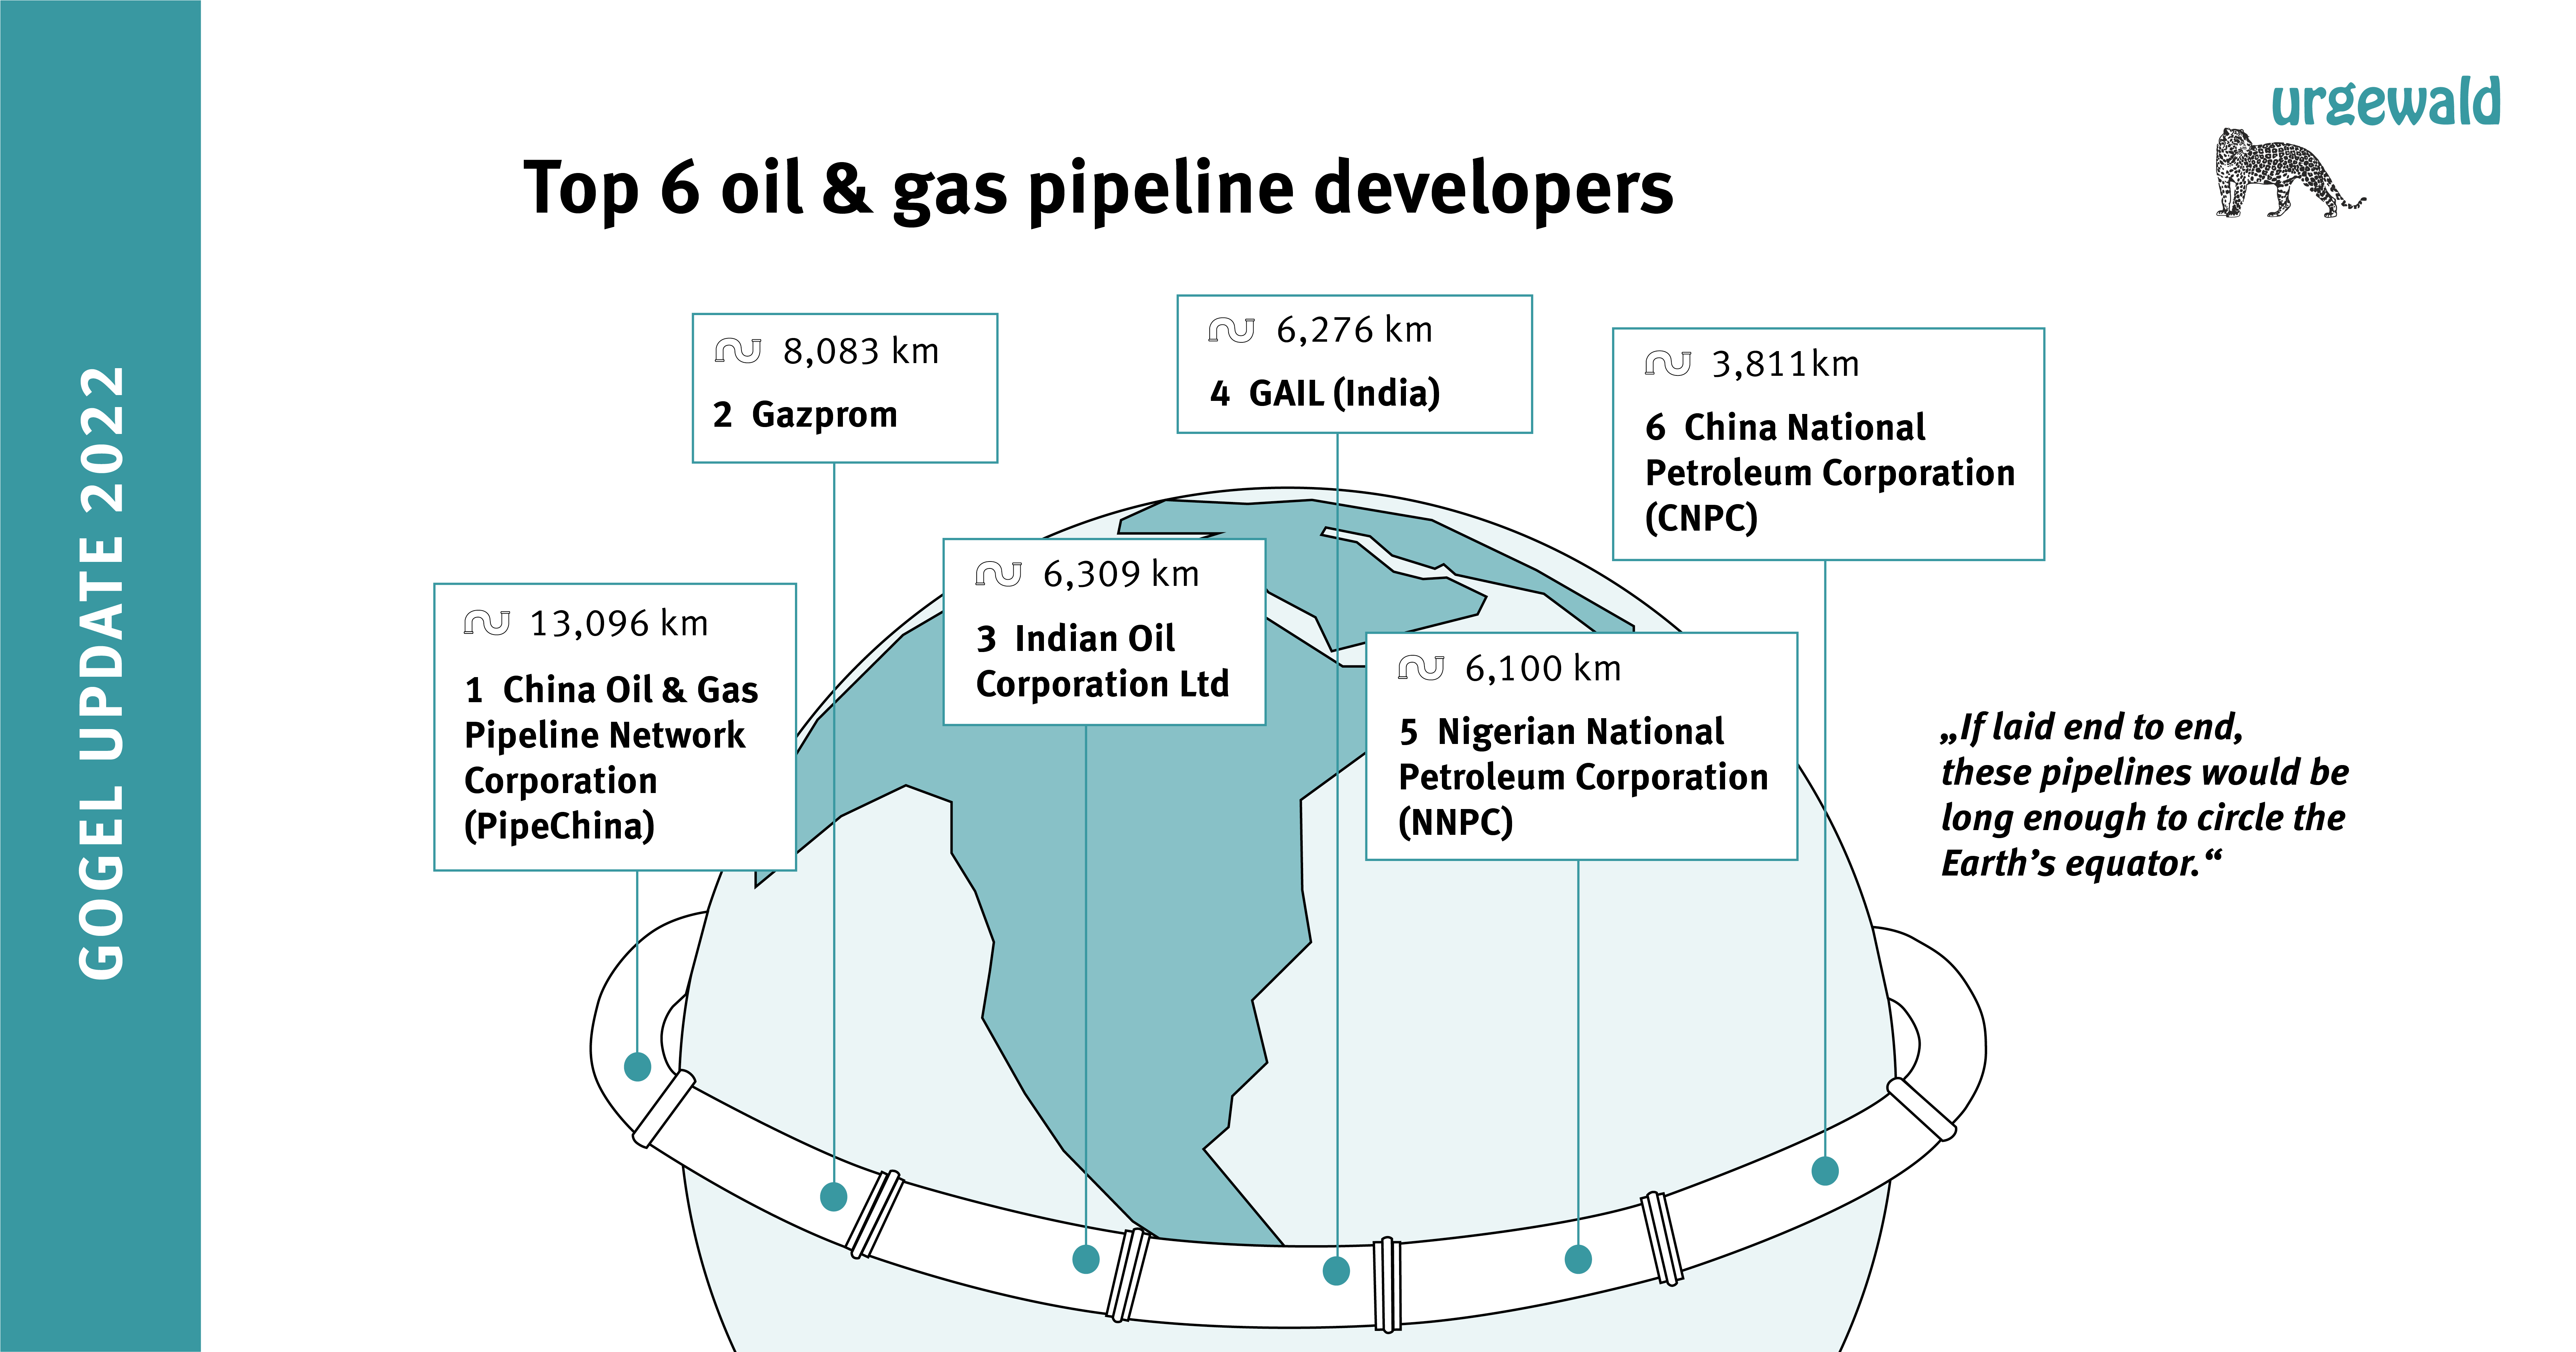 Companies with longest pipelines under development